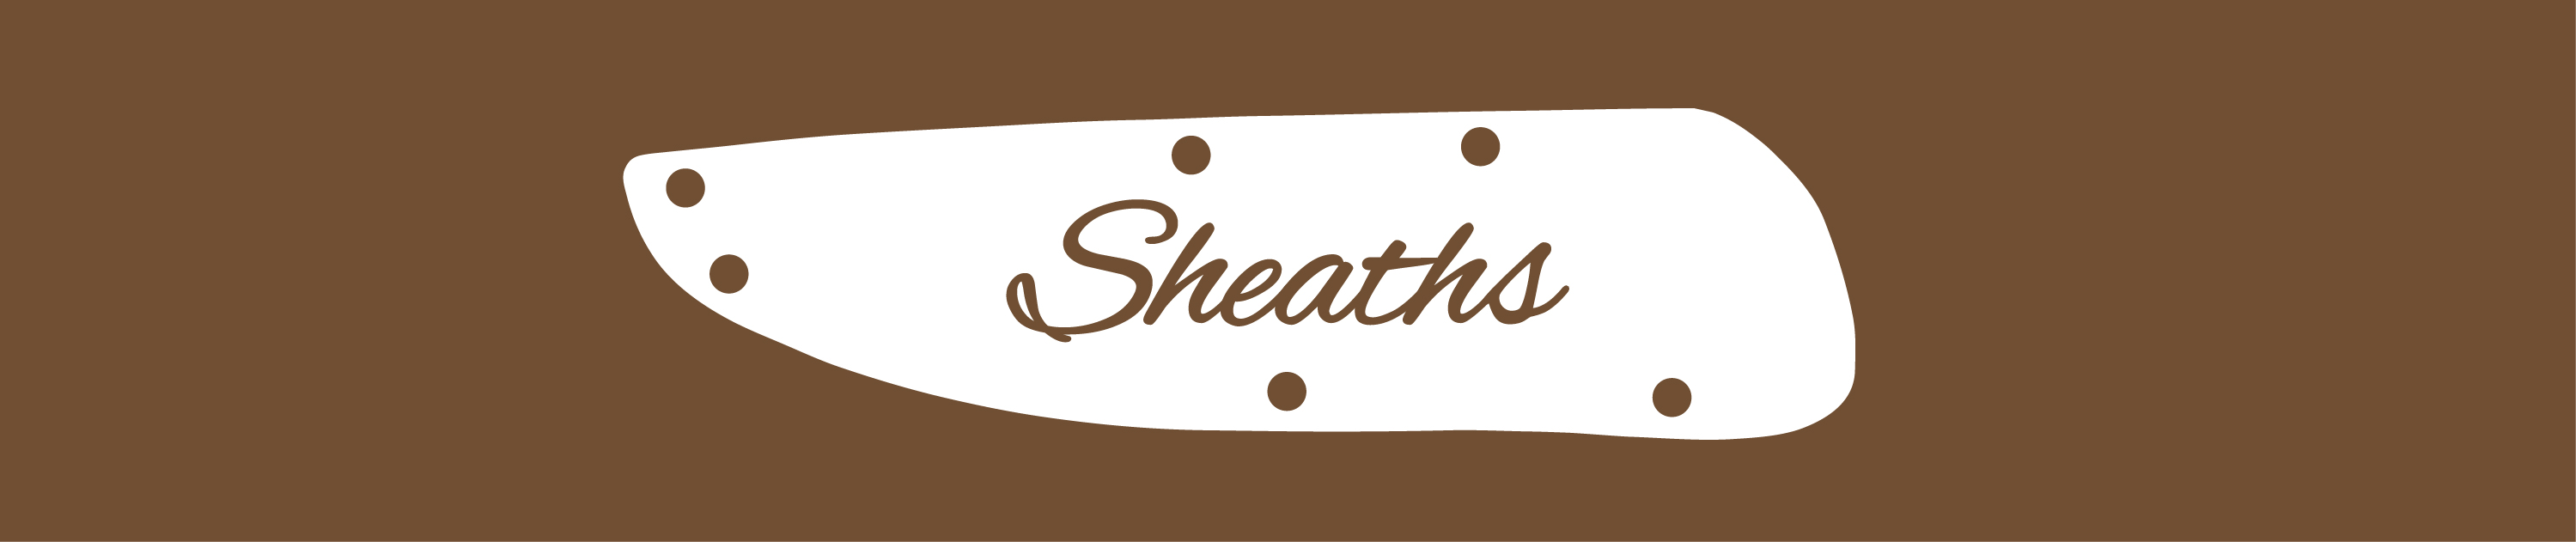 Sheath Materials